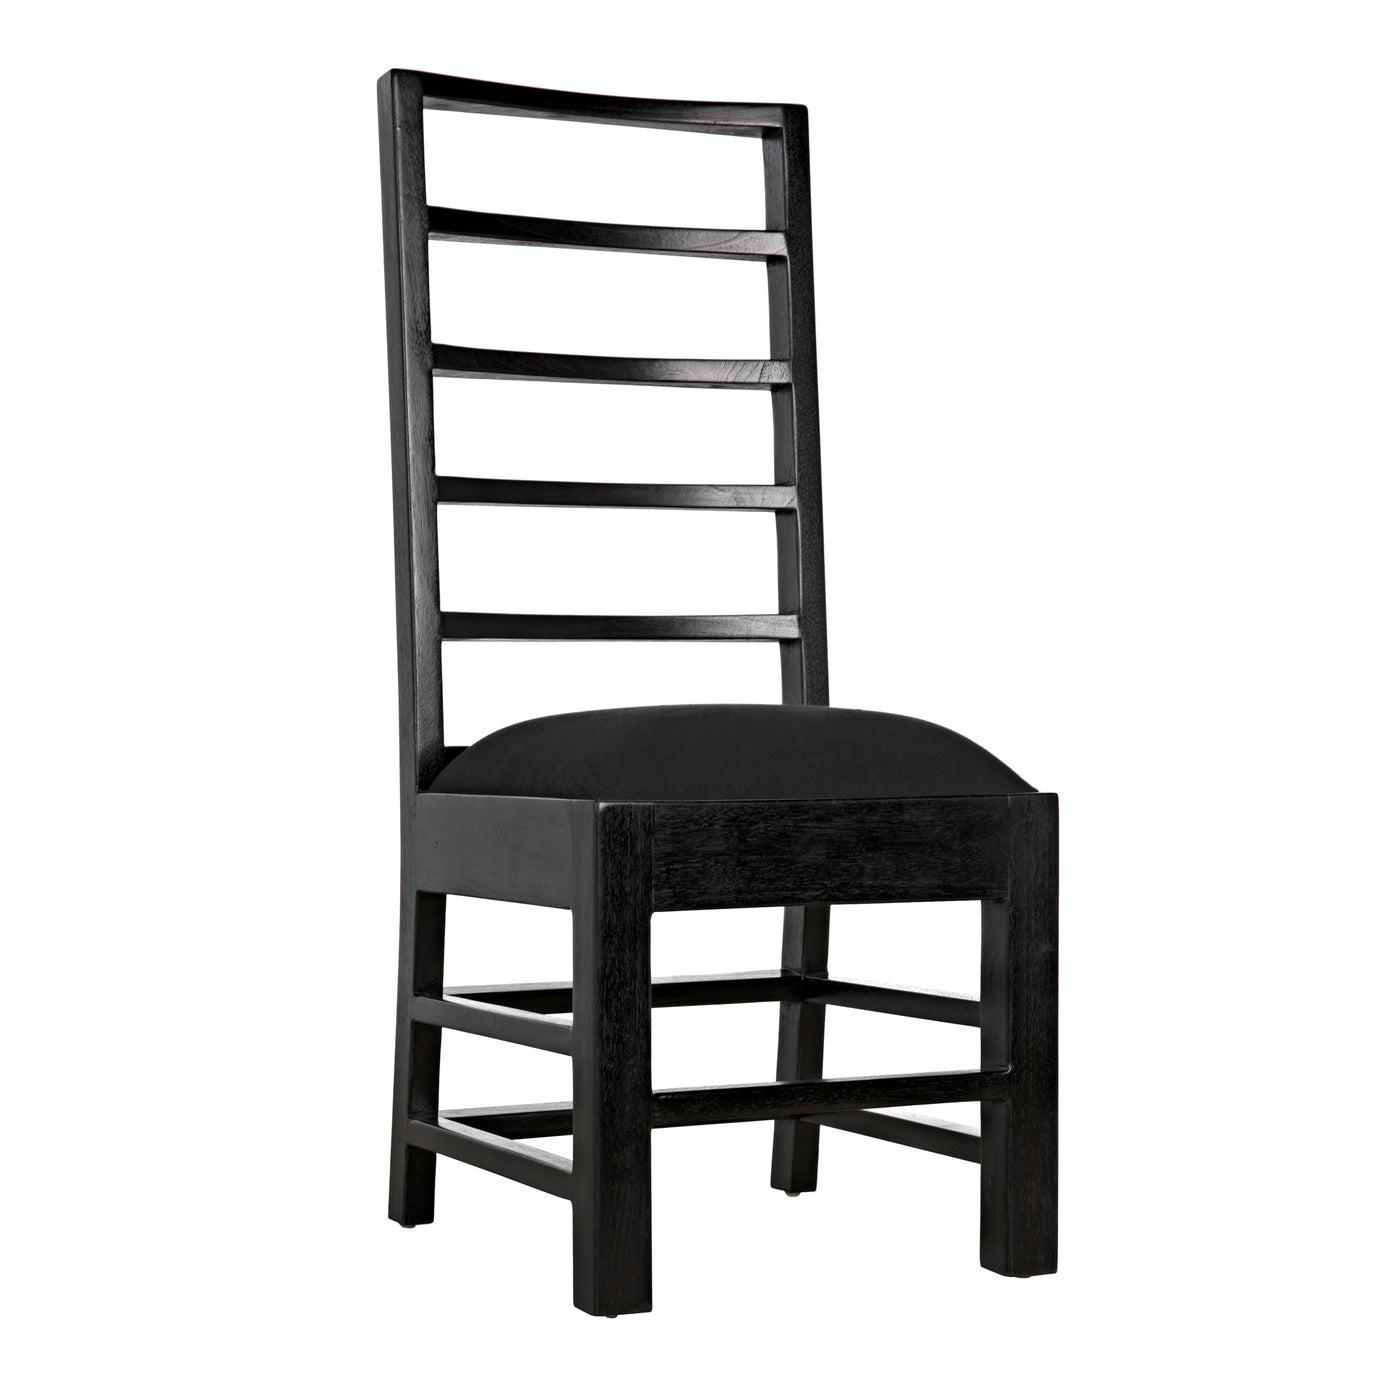 Leandro Chair, Charcoal Black